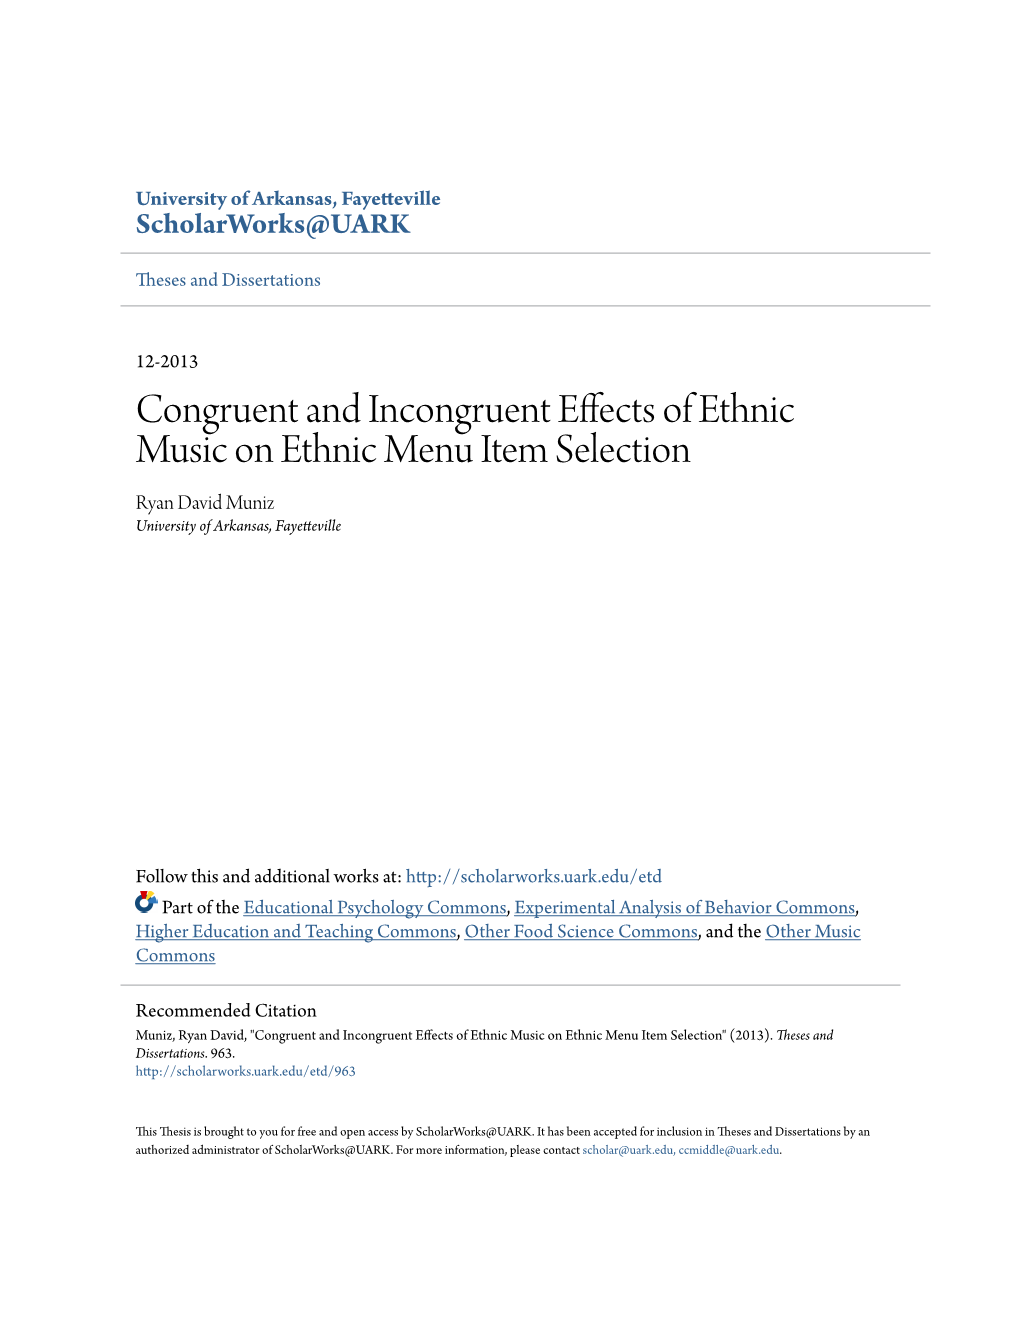 Congruent and Incongruent Effects of Ethnic Music on Ethnic Menu Item Selection Ryan David Muniz University of Arkansas, Fayetteville